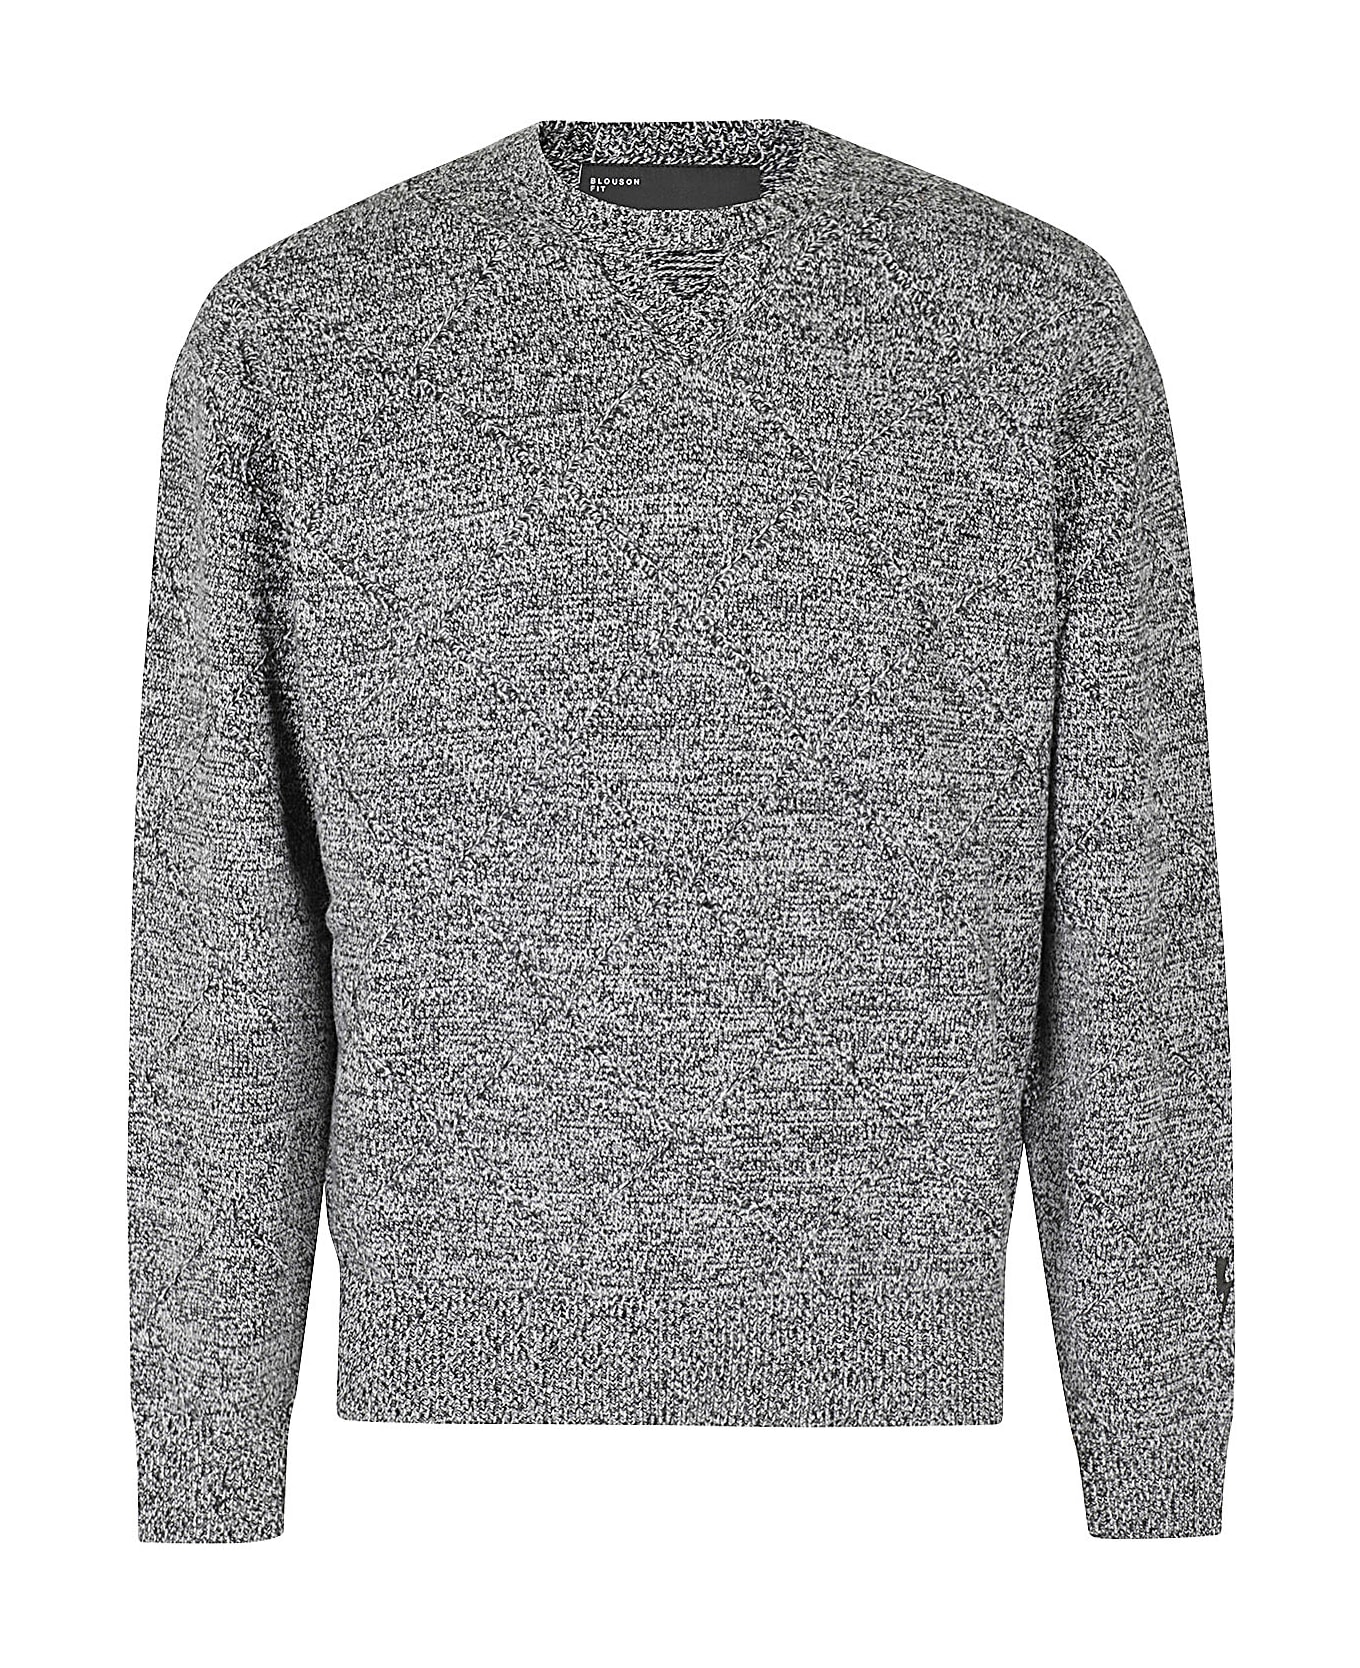 Neil Barrett Triangle Neck Detail Sweater - Black White